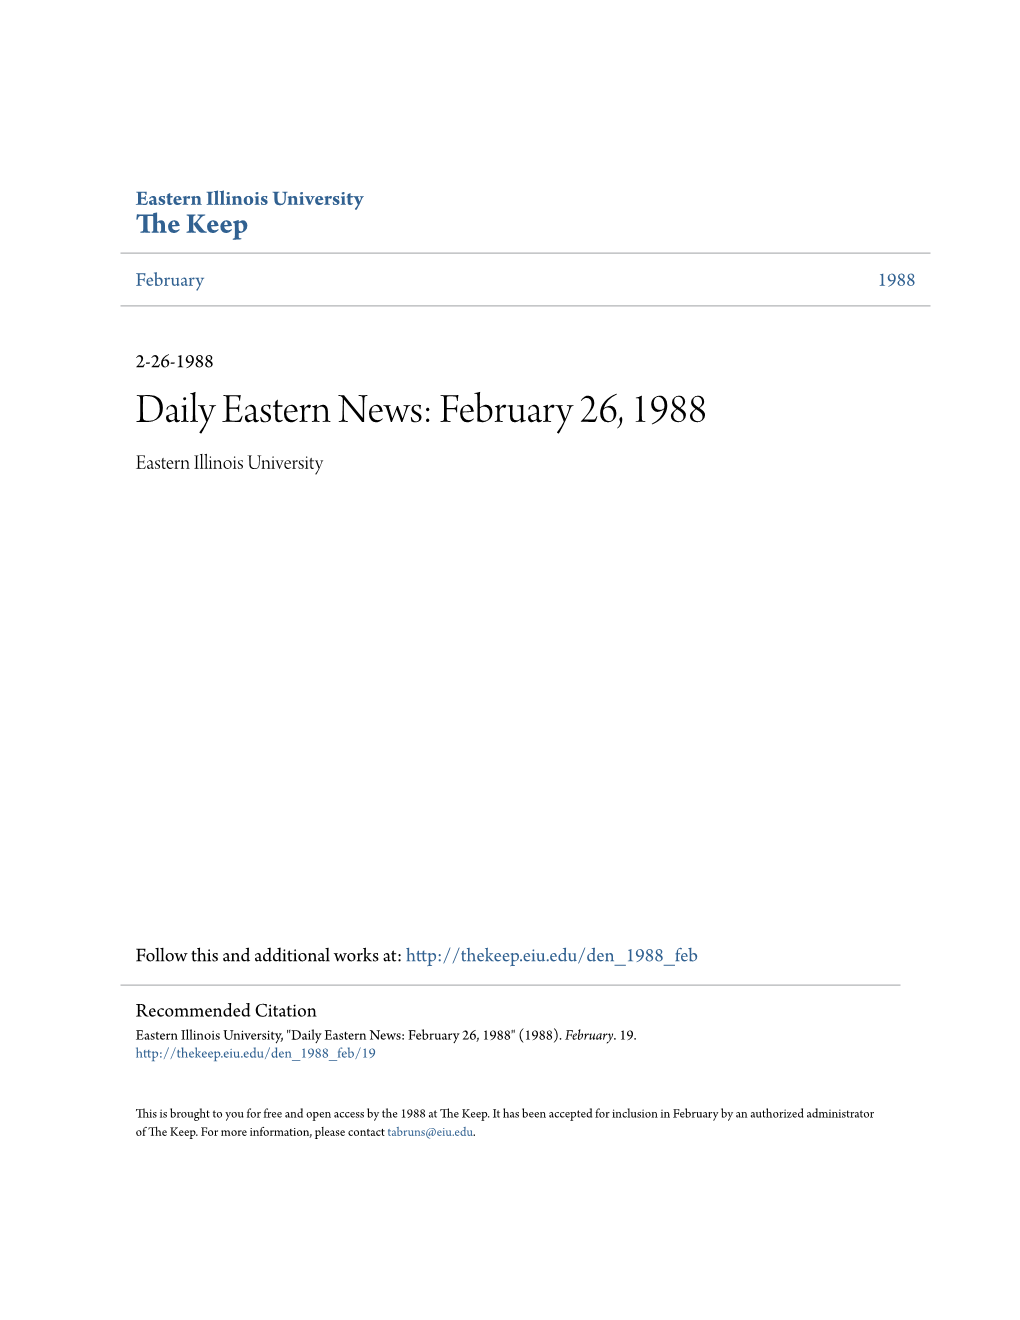 Astern News: February 26, 1988 Eastern Illinois University